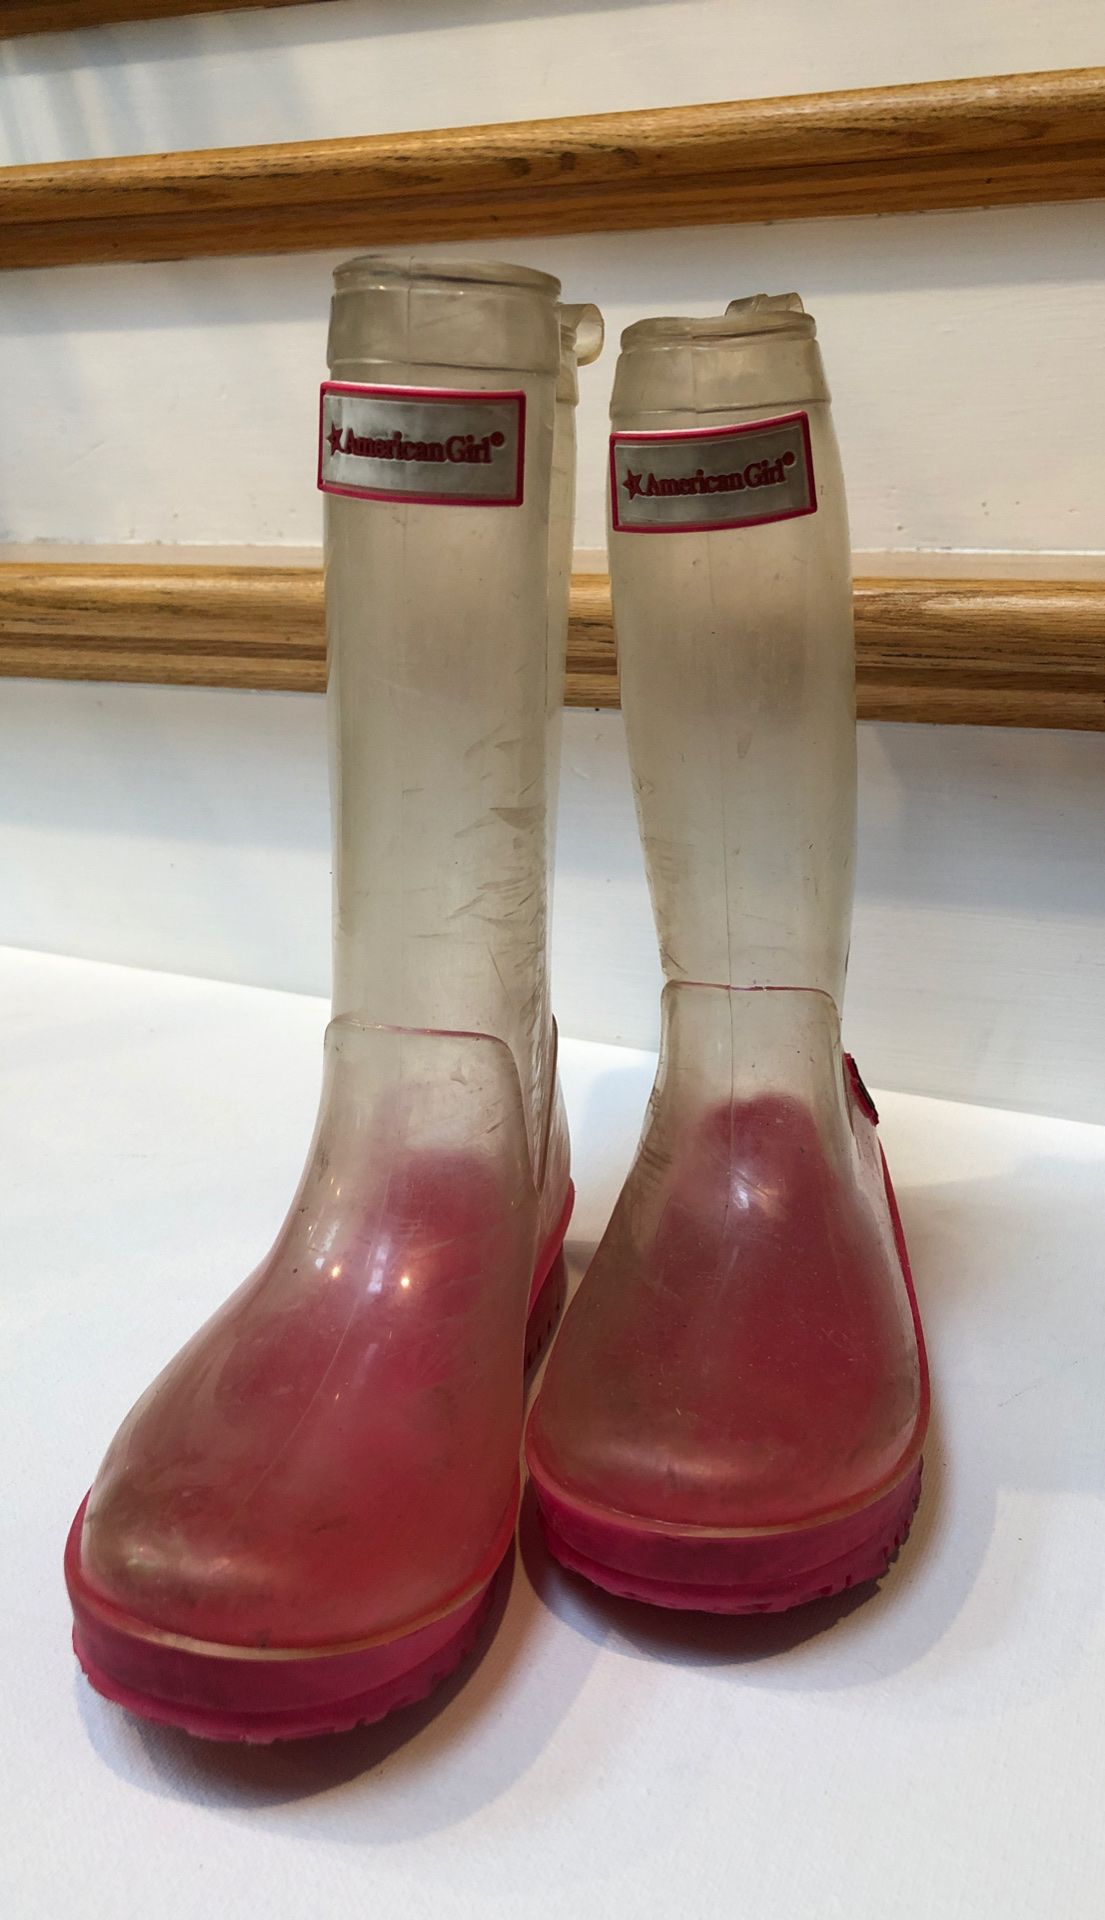 American Girl WellieWishers rain boots Girls size 12/13